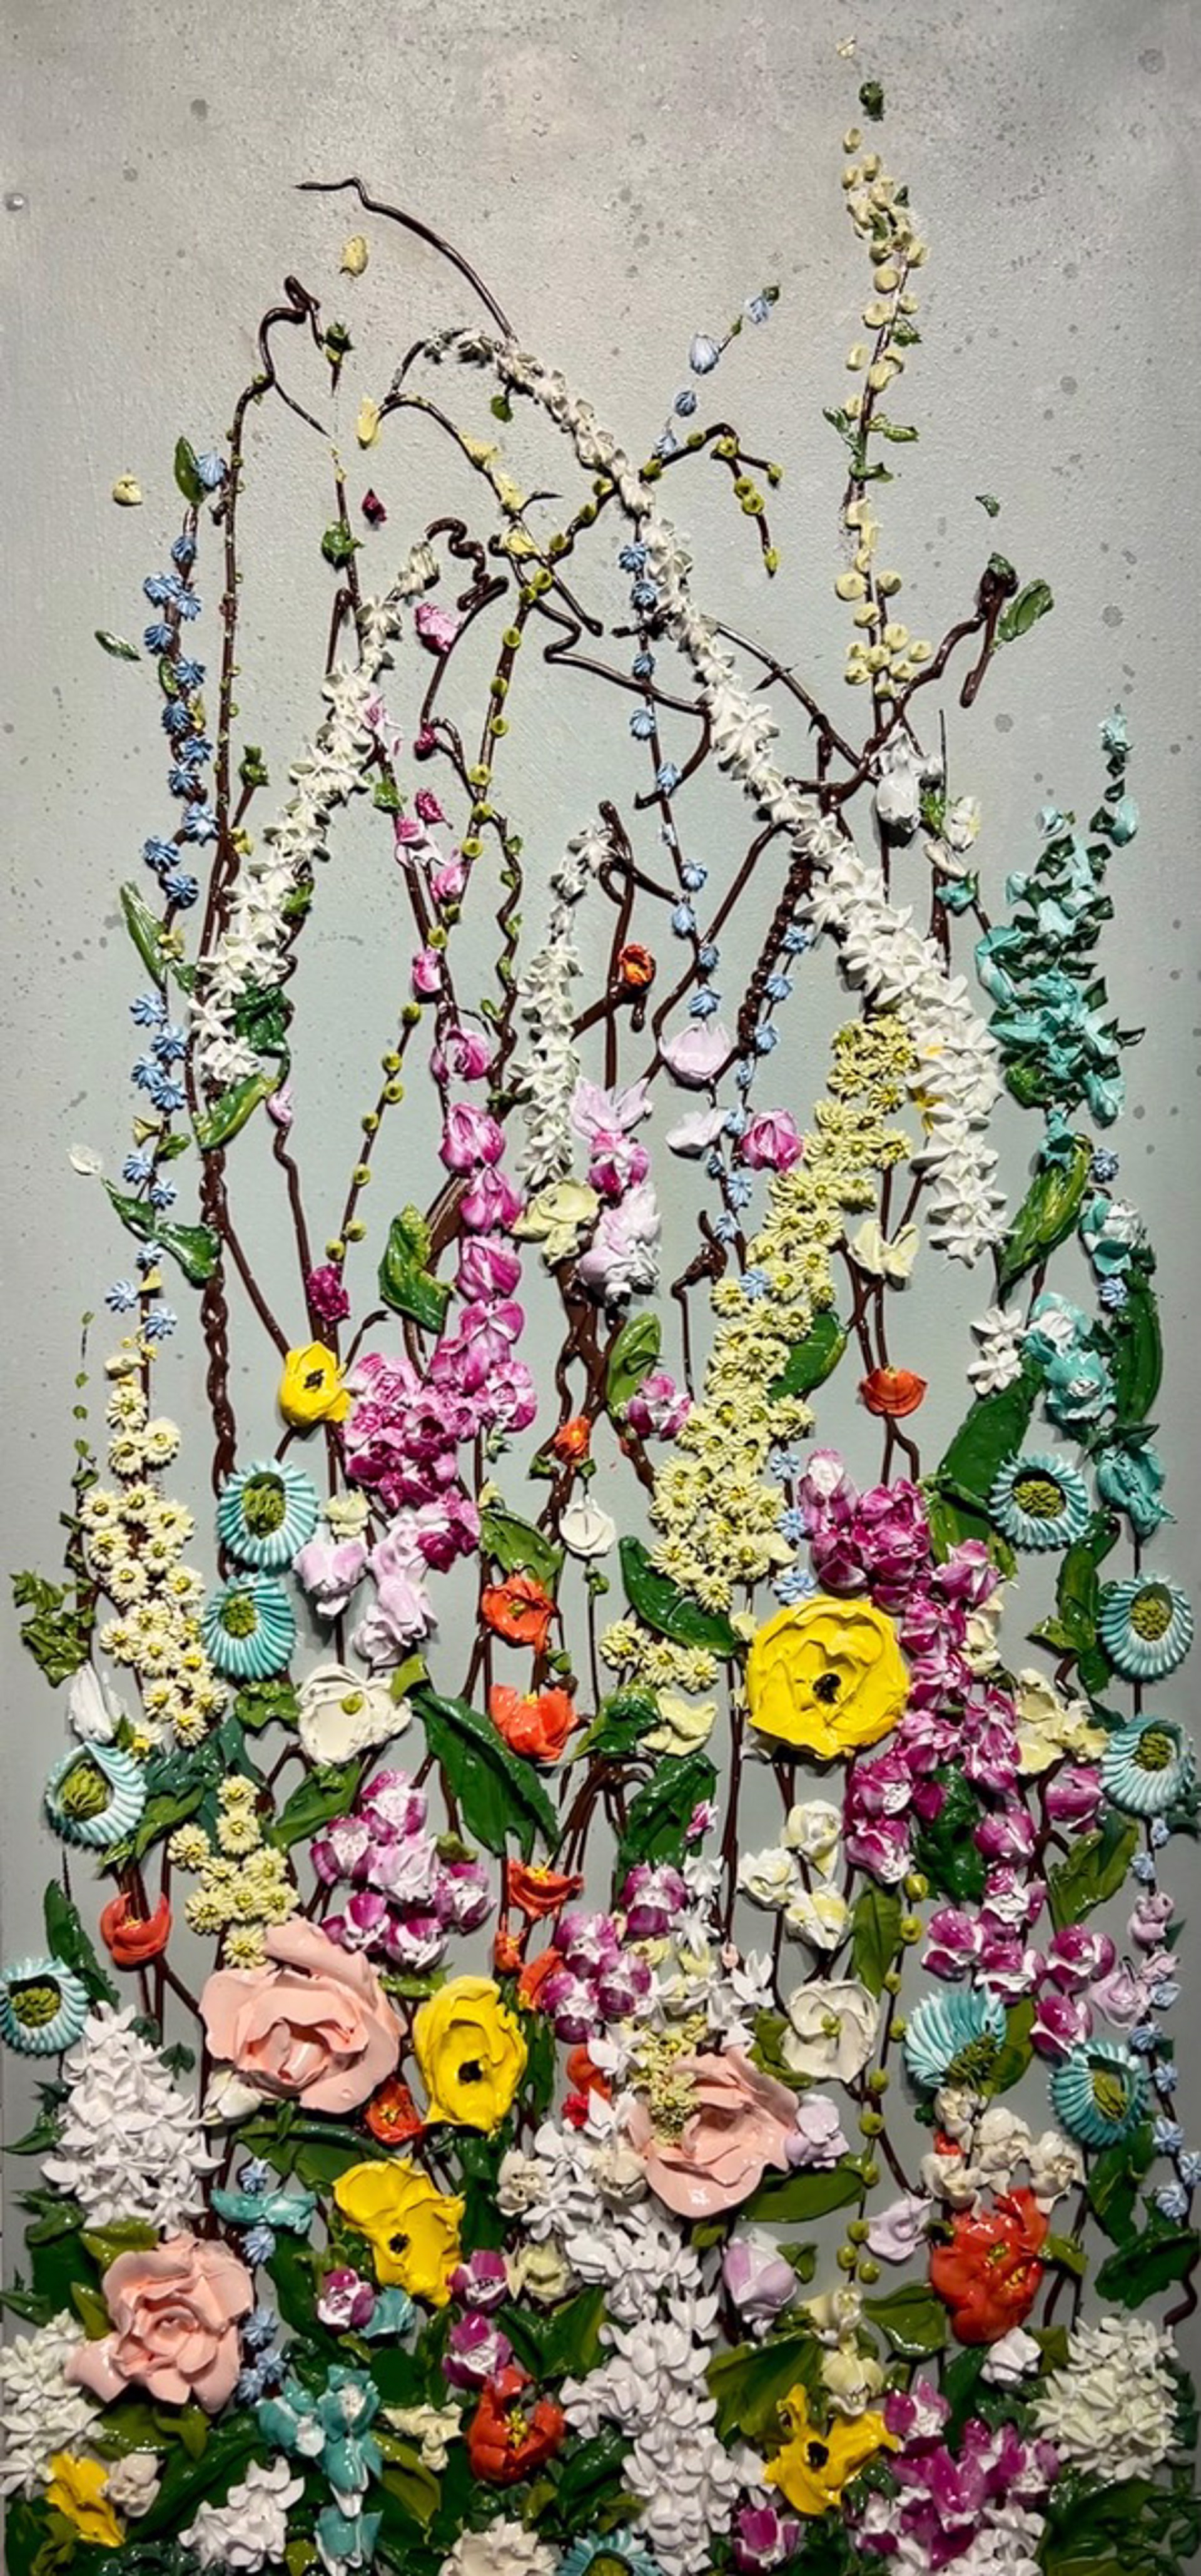 WildFlowers 2 (Floral #516) by Judith Dunbar